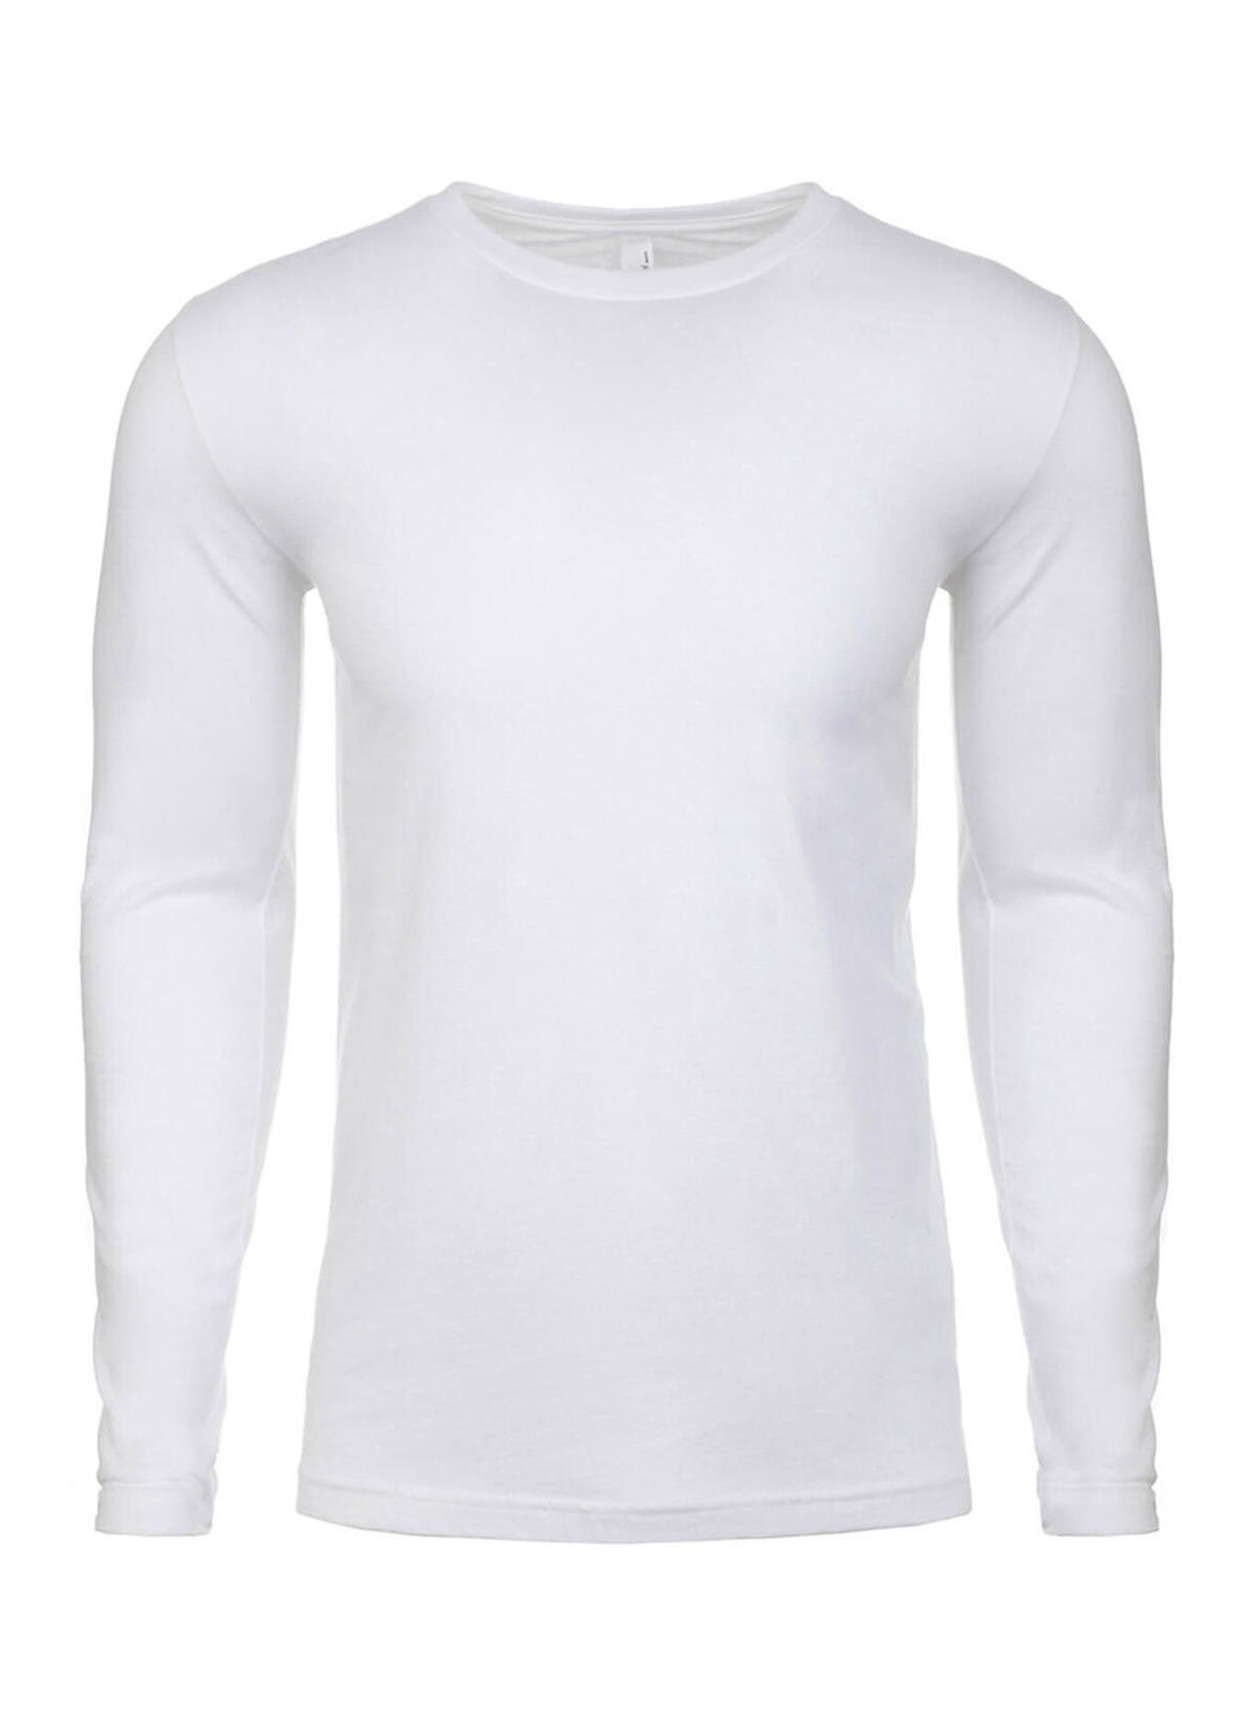 Next Level Men's White Cotton Long-Sleeve Crew T-Shirt